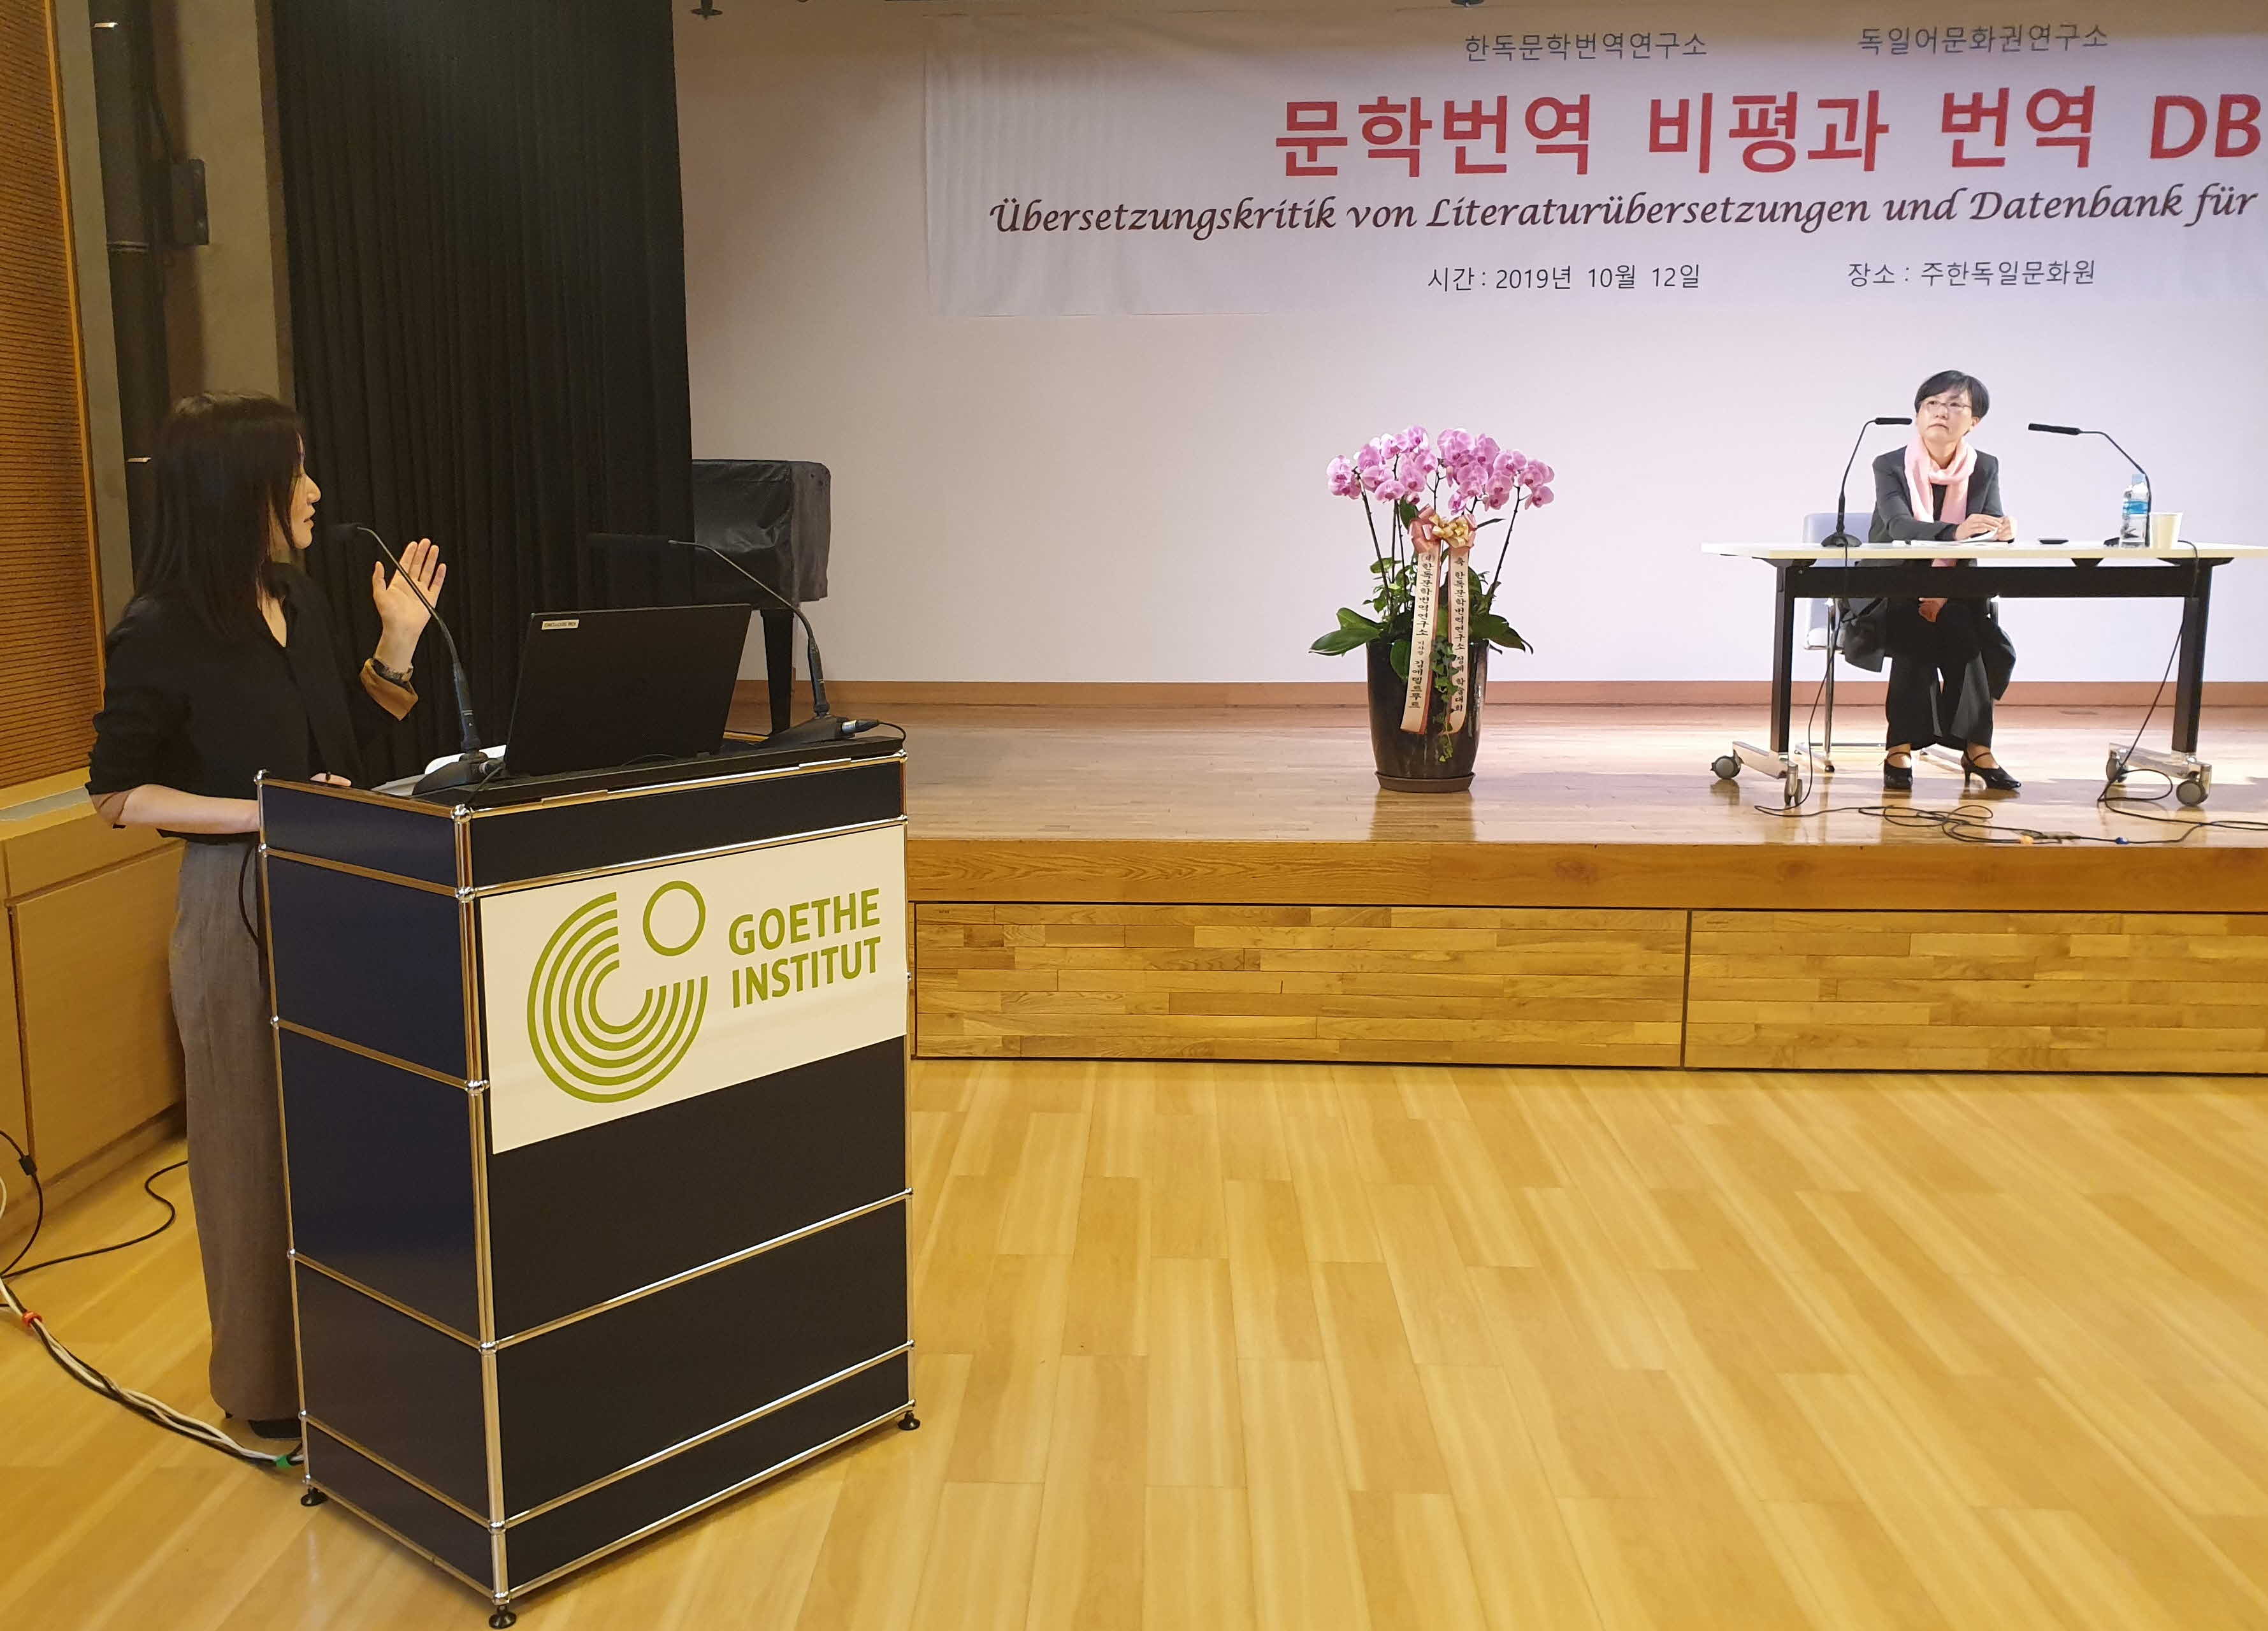 028 Ende der Diskussion mit der Referentin CHUNG Hye-yong.jpg